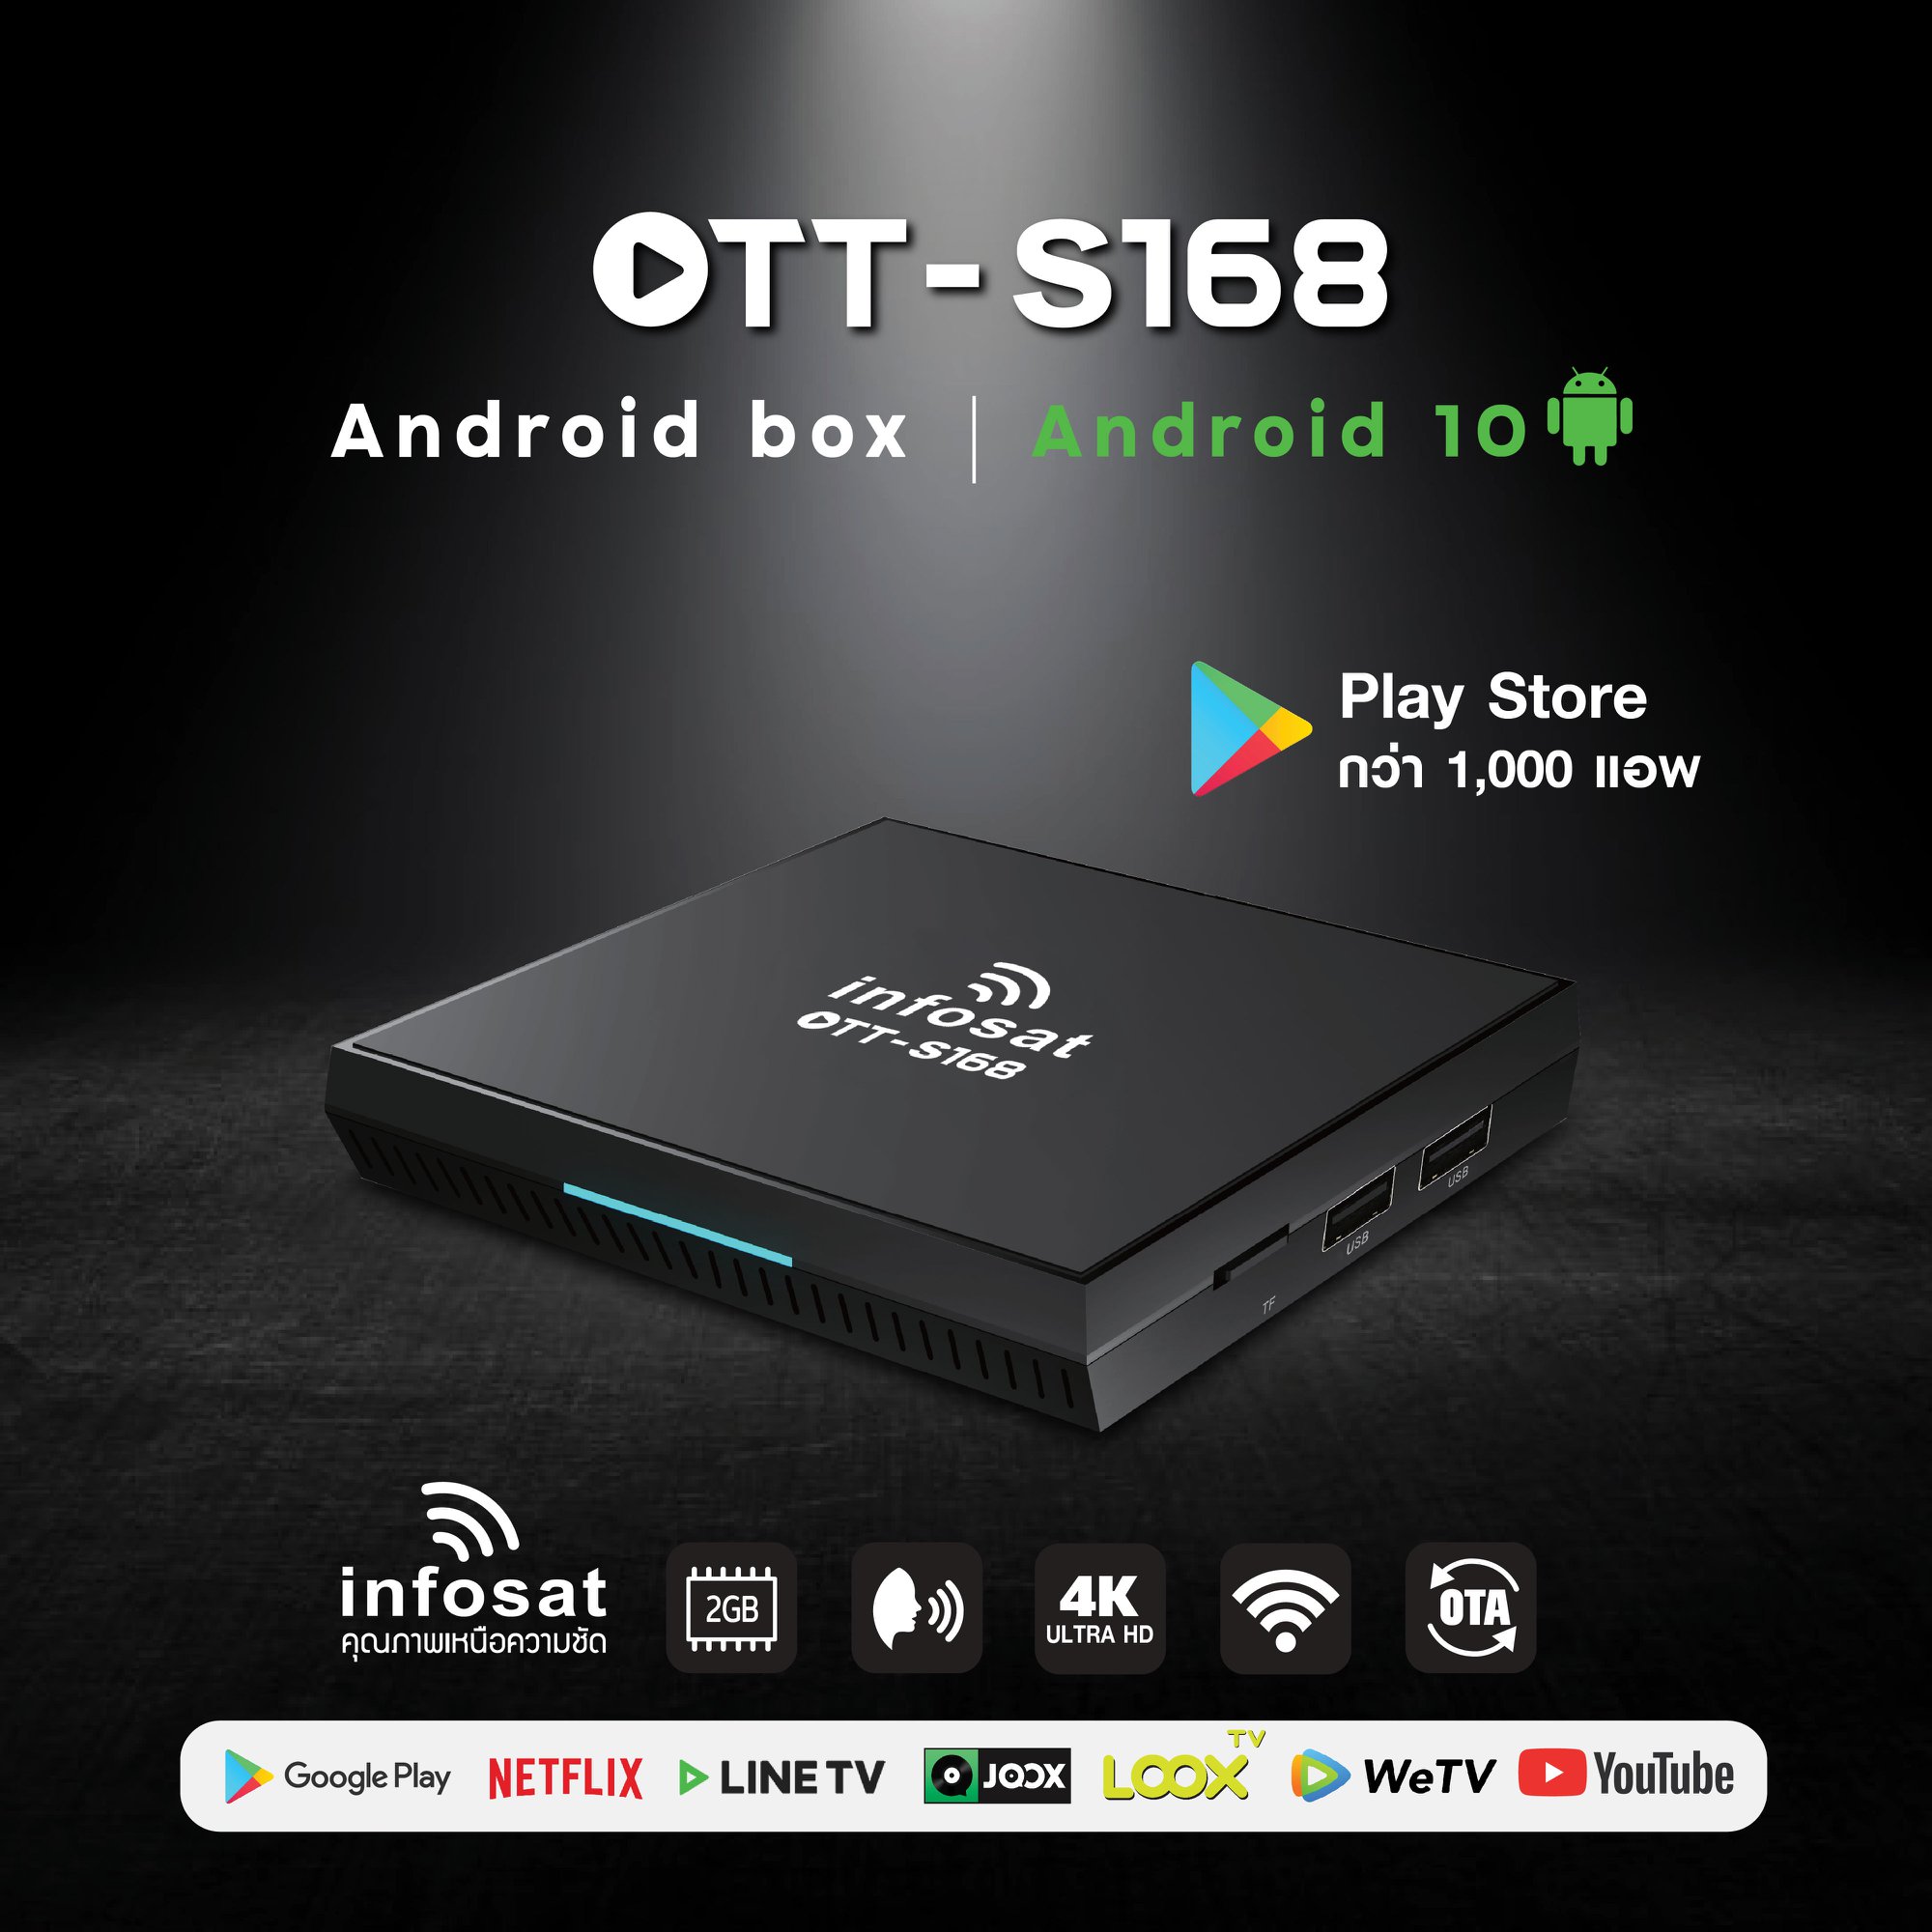 INFOSAT Android10 OTT-S168 รับสัญญาณทีวีผ่านอินเตอร์เน็ตอินโฟแซท  รุ่นใหม่มี app infosat tv และโหลดเพิ่มเองได้ไม่จำกัด